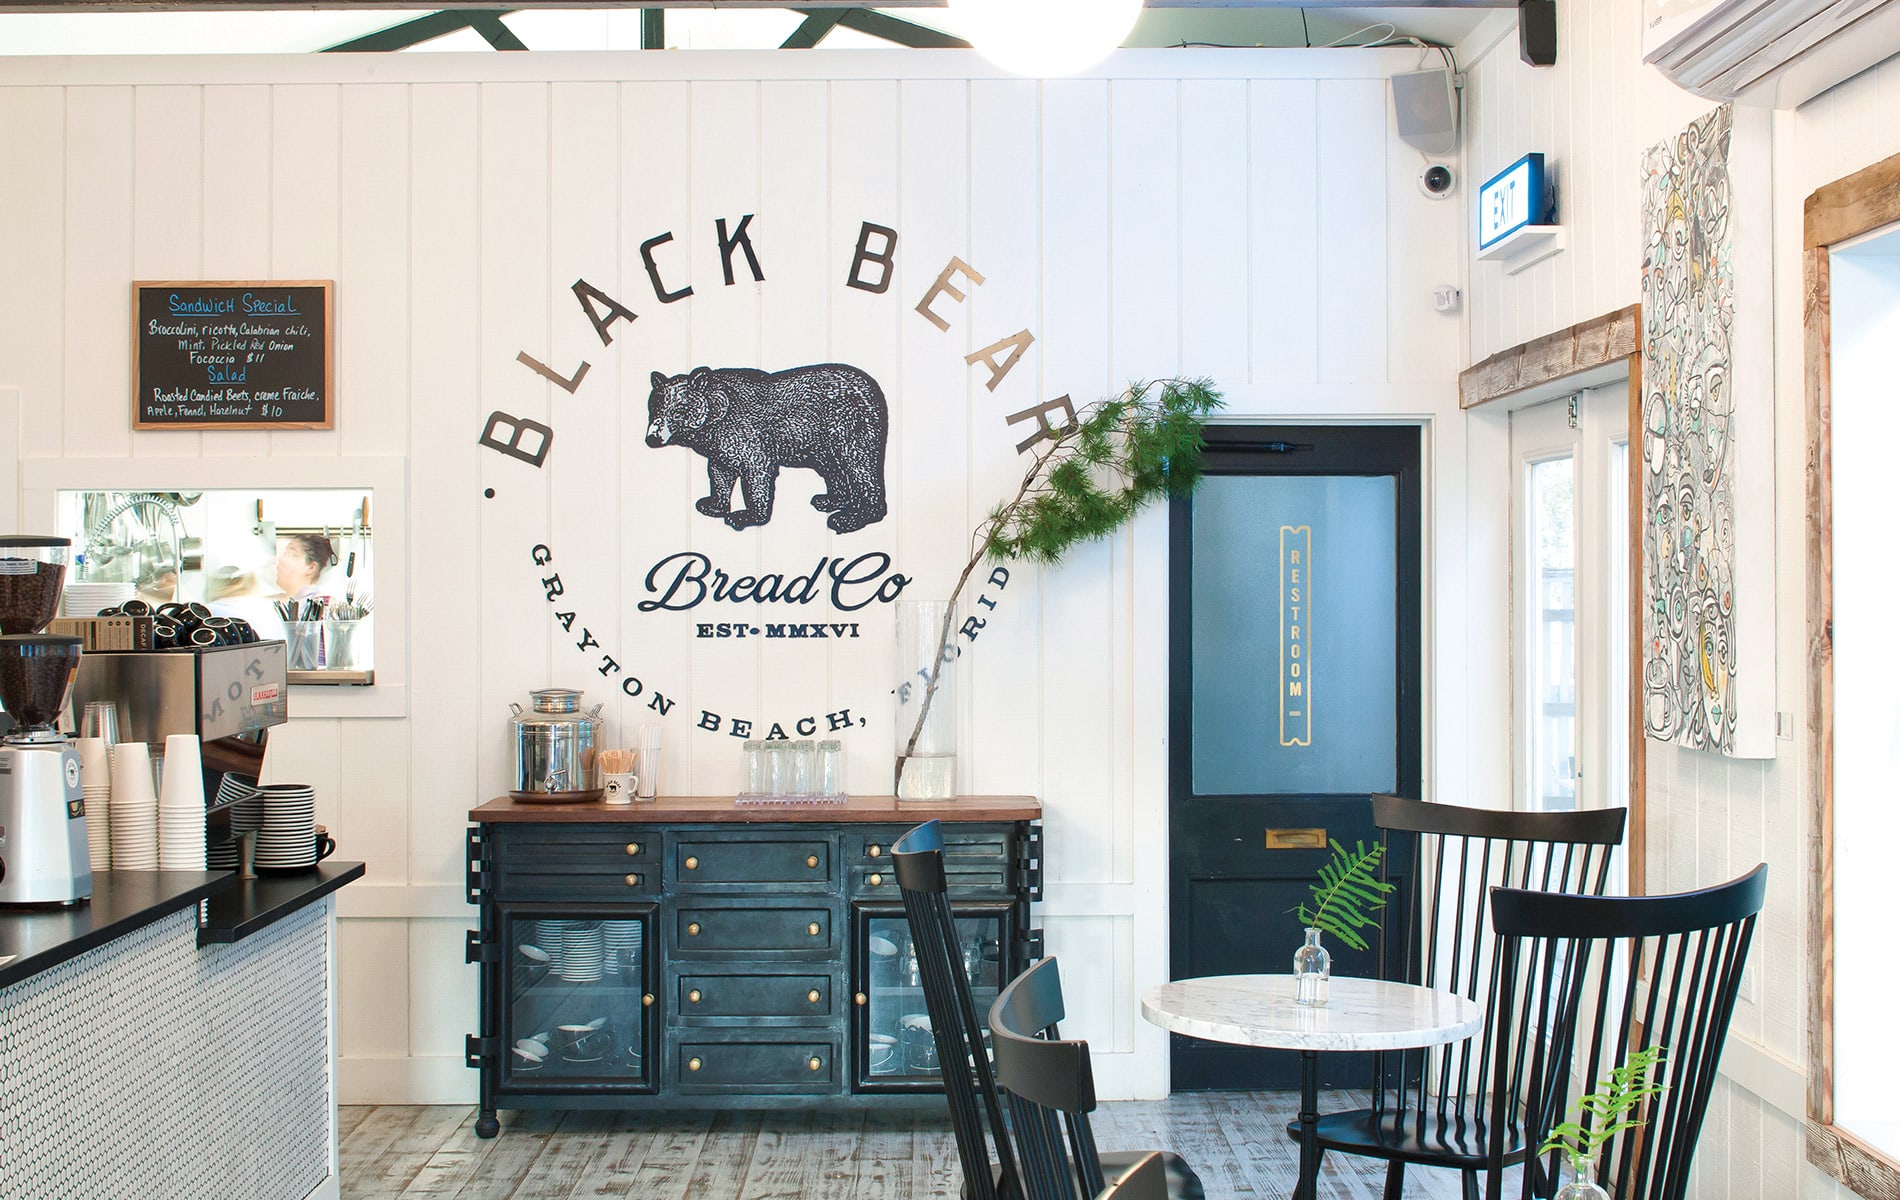 Black Bear Bread Co. in Grayton Beach, Florida